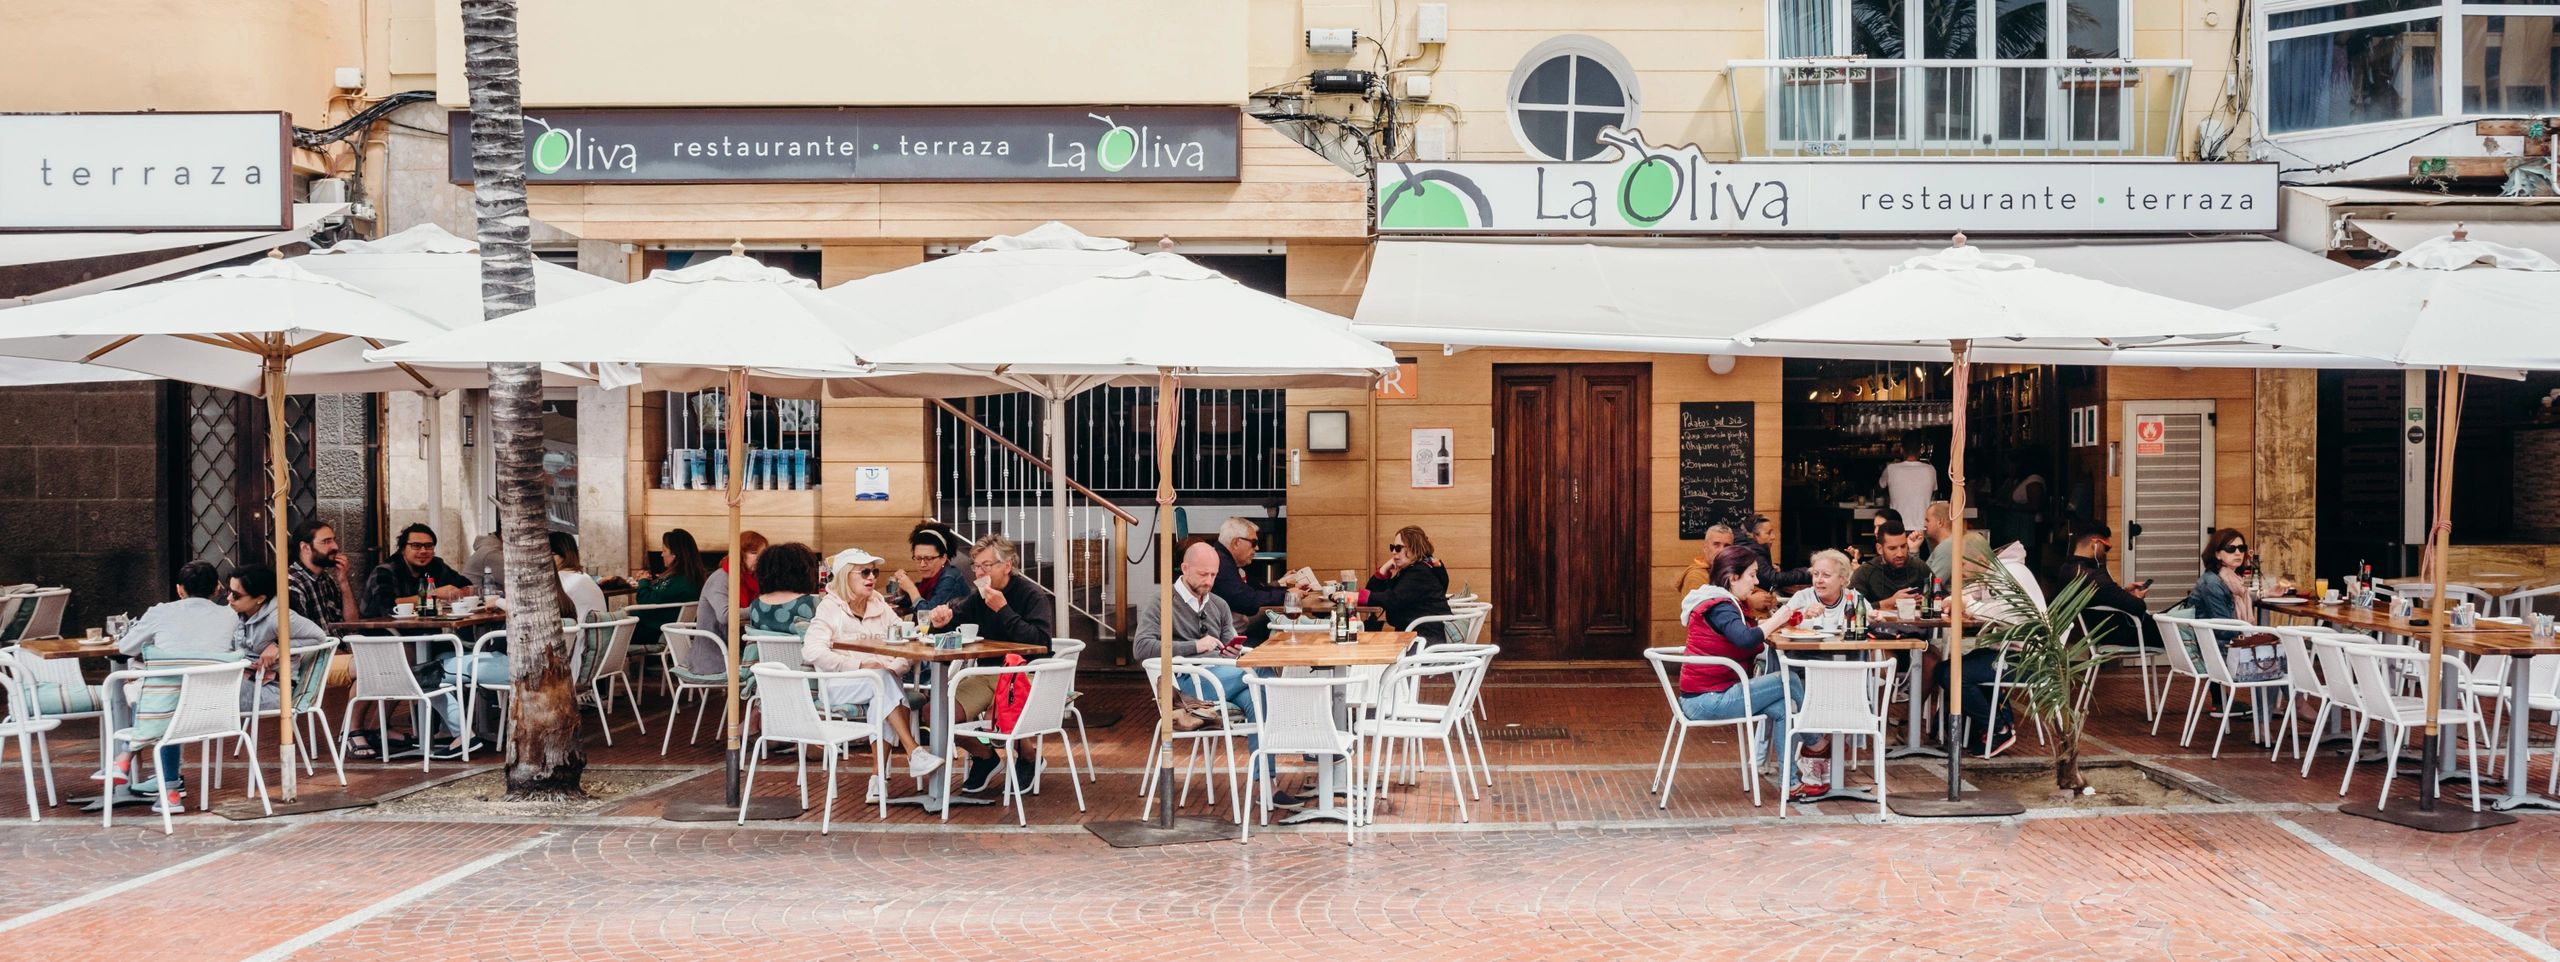 La Oliva restaurante